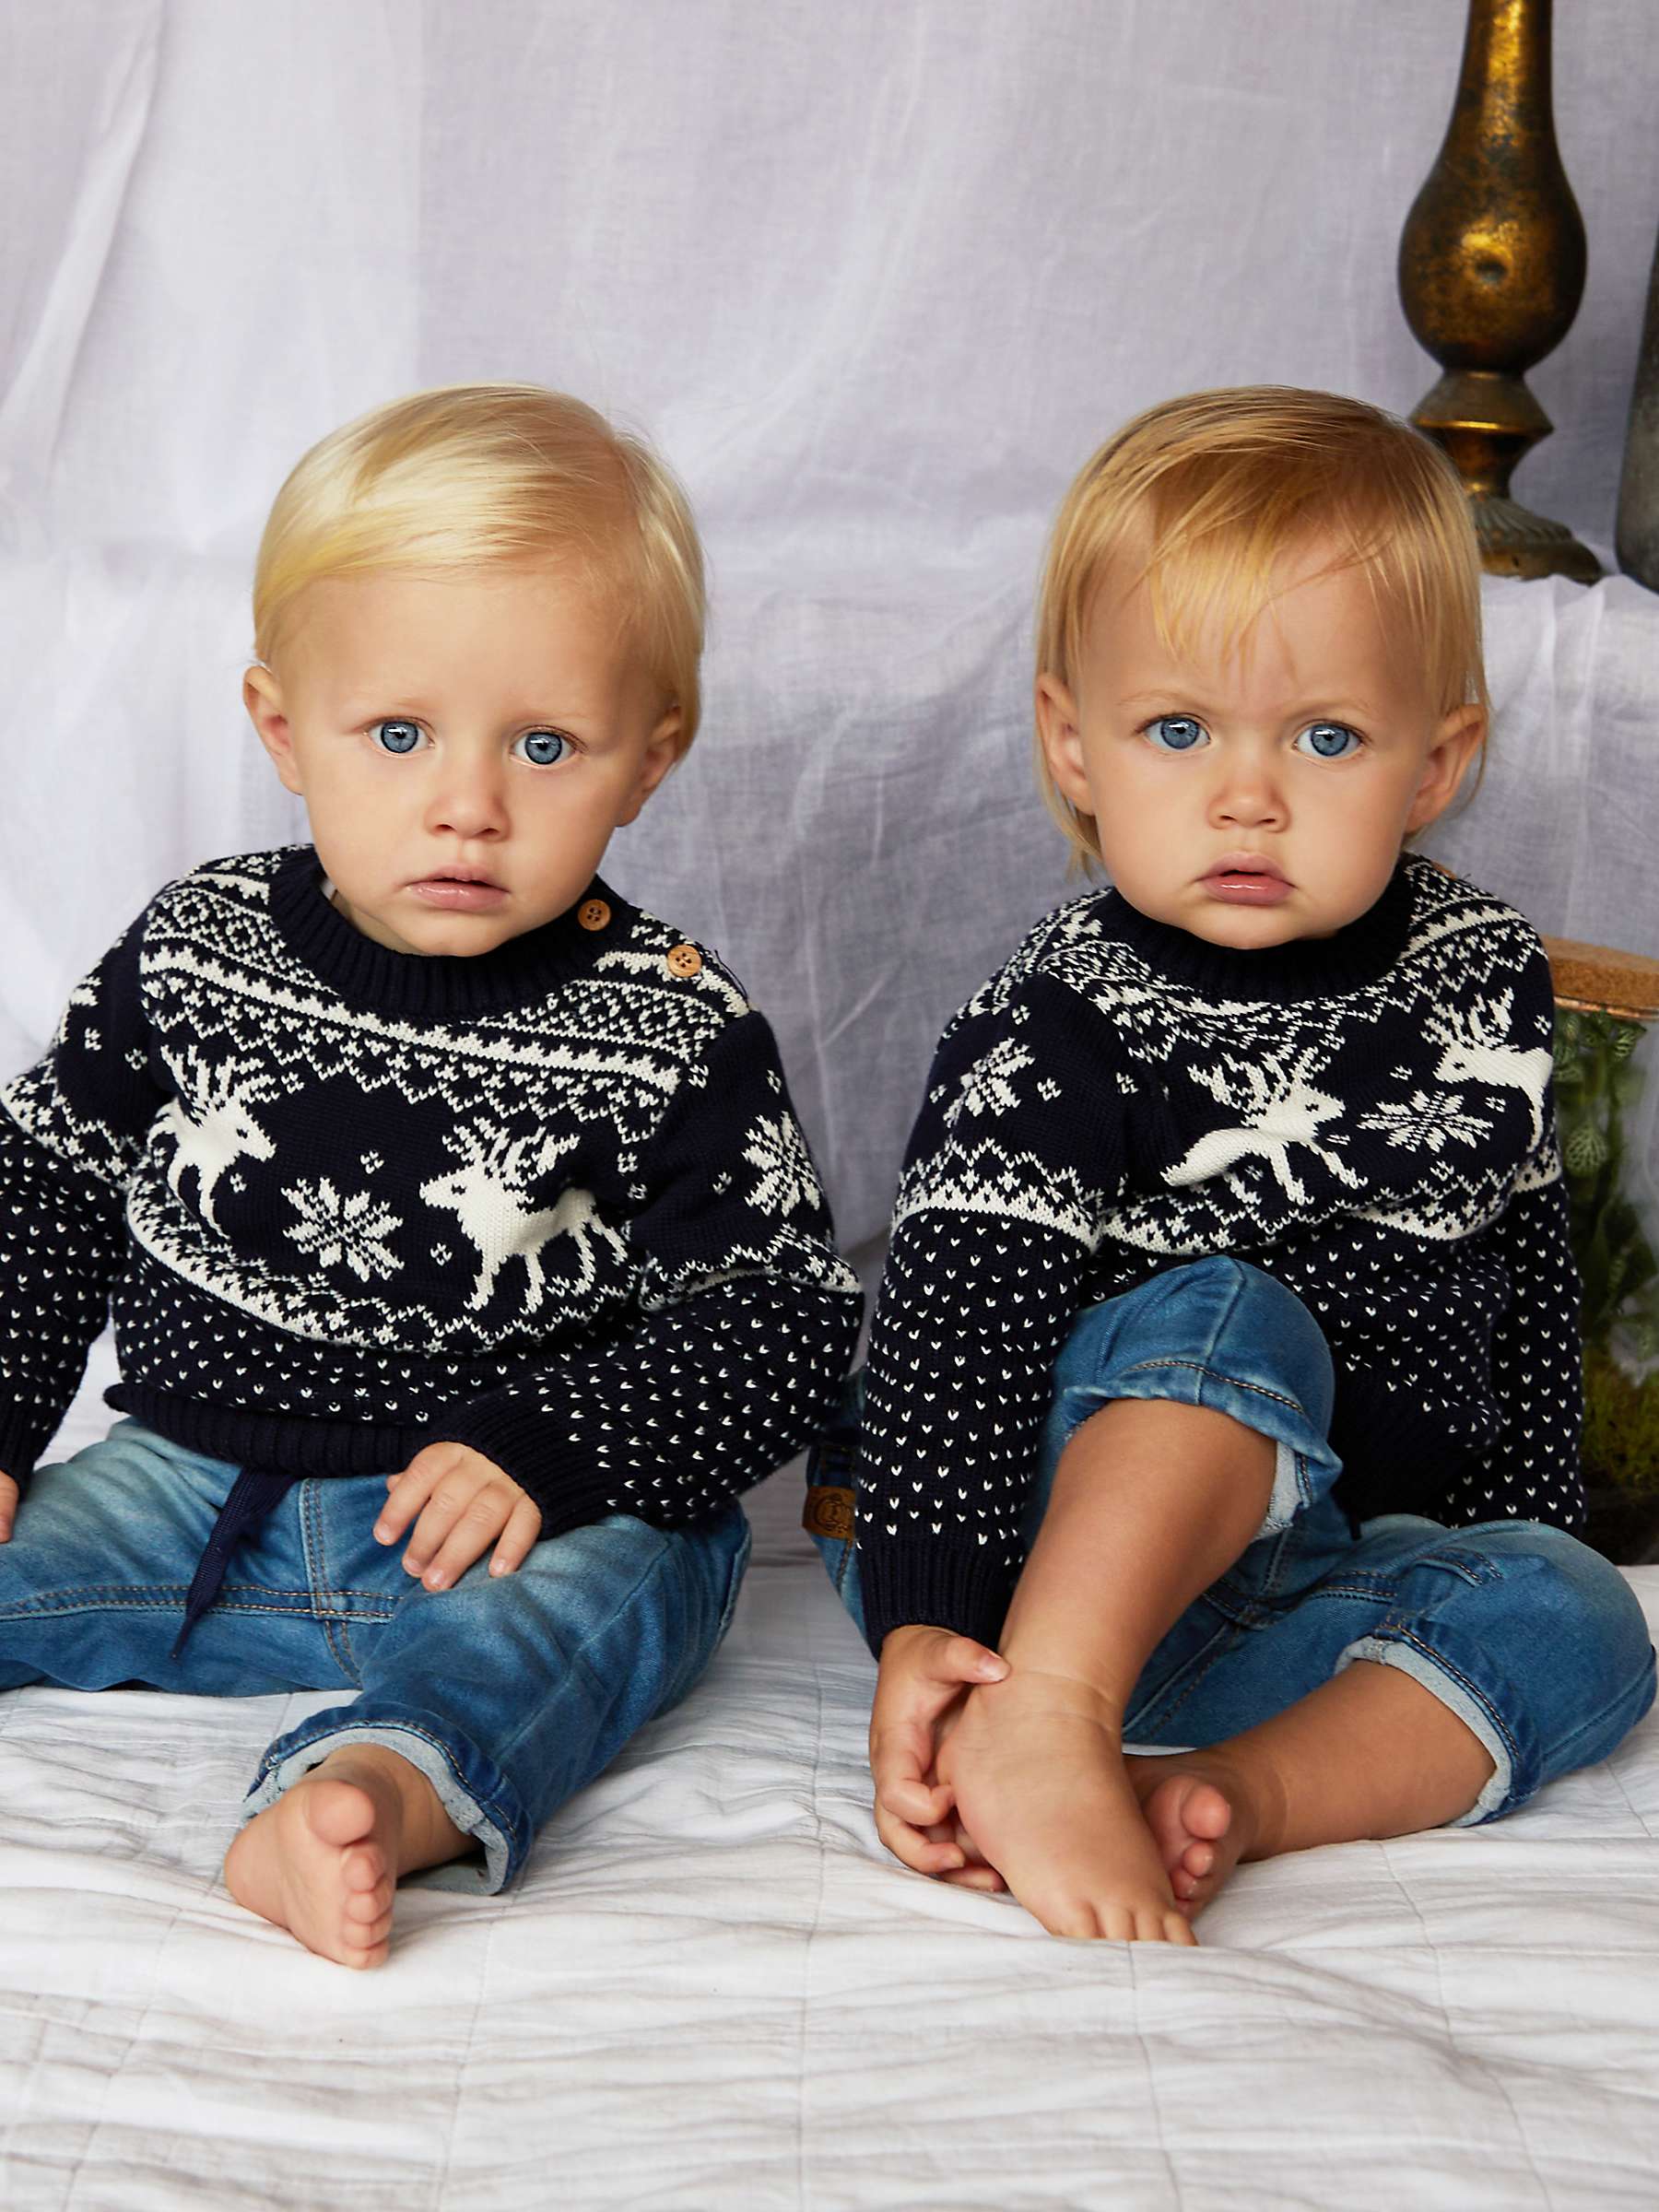 Buy The Little Tailor Baby & Kids' Christmas Fairisle Jumper Online at johnlewis.com